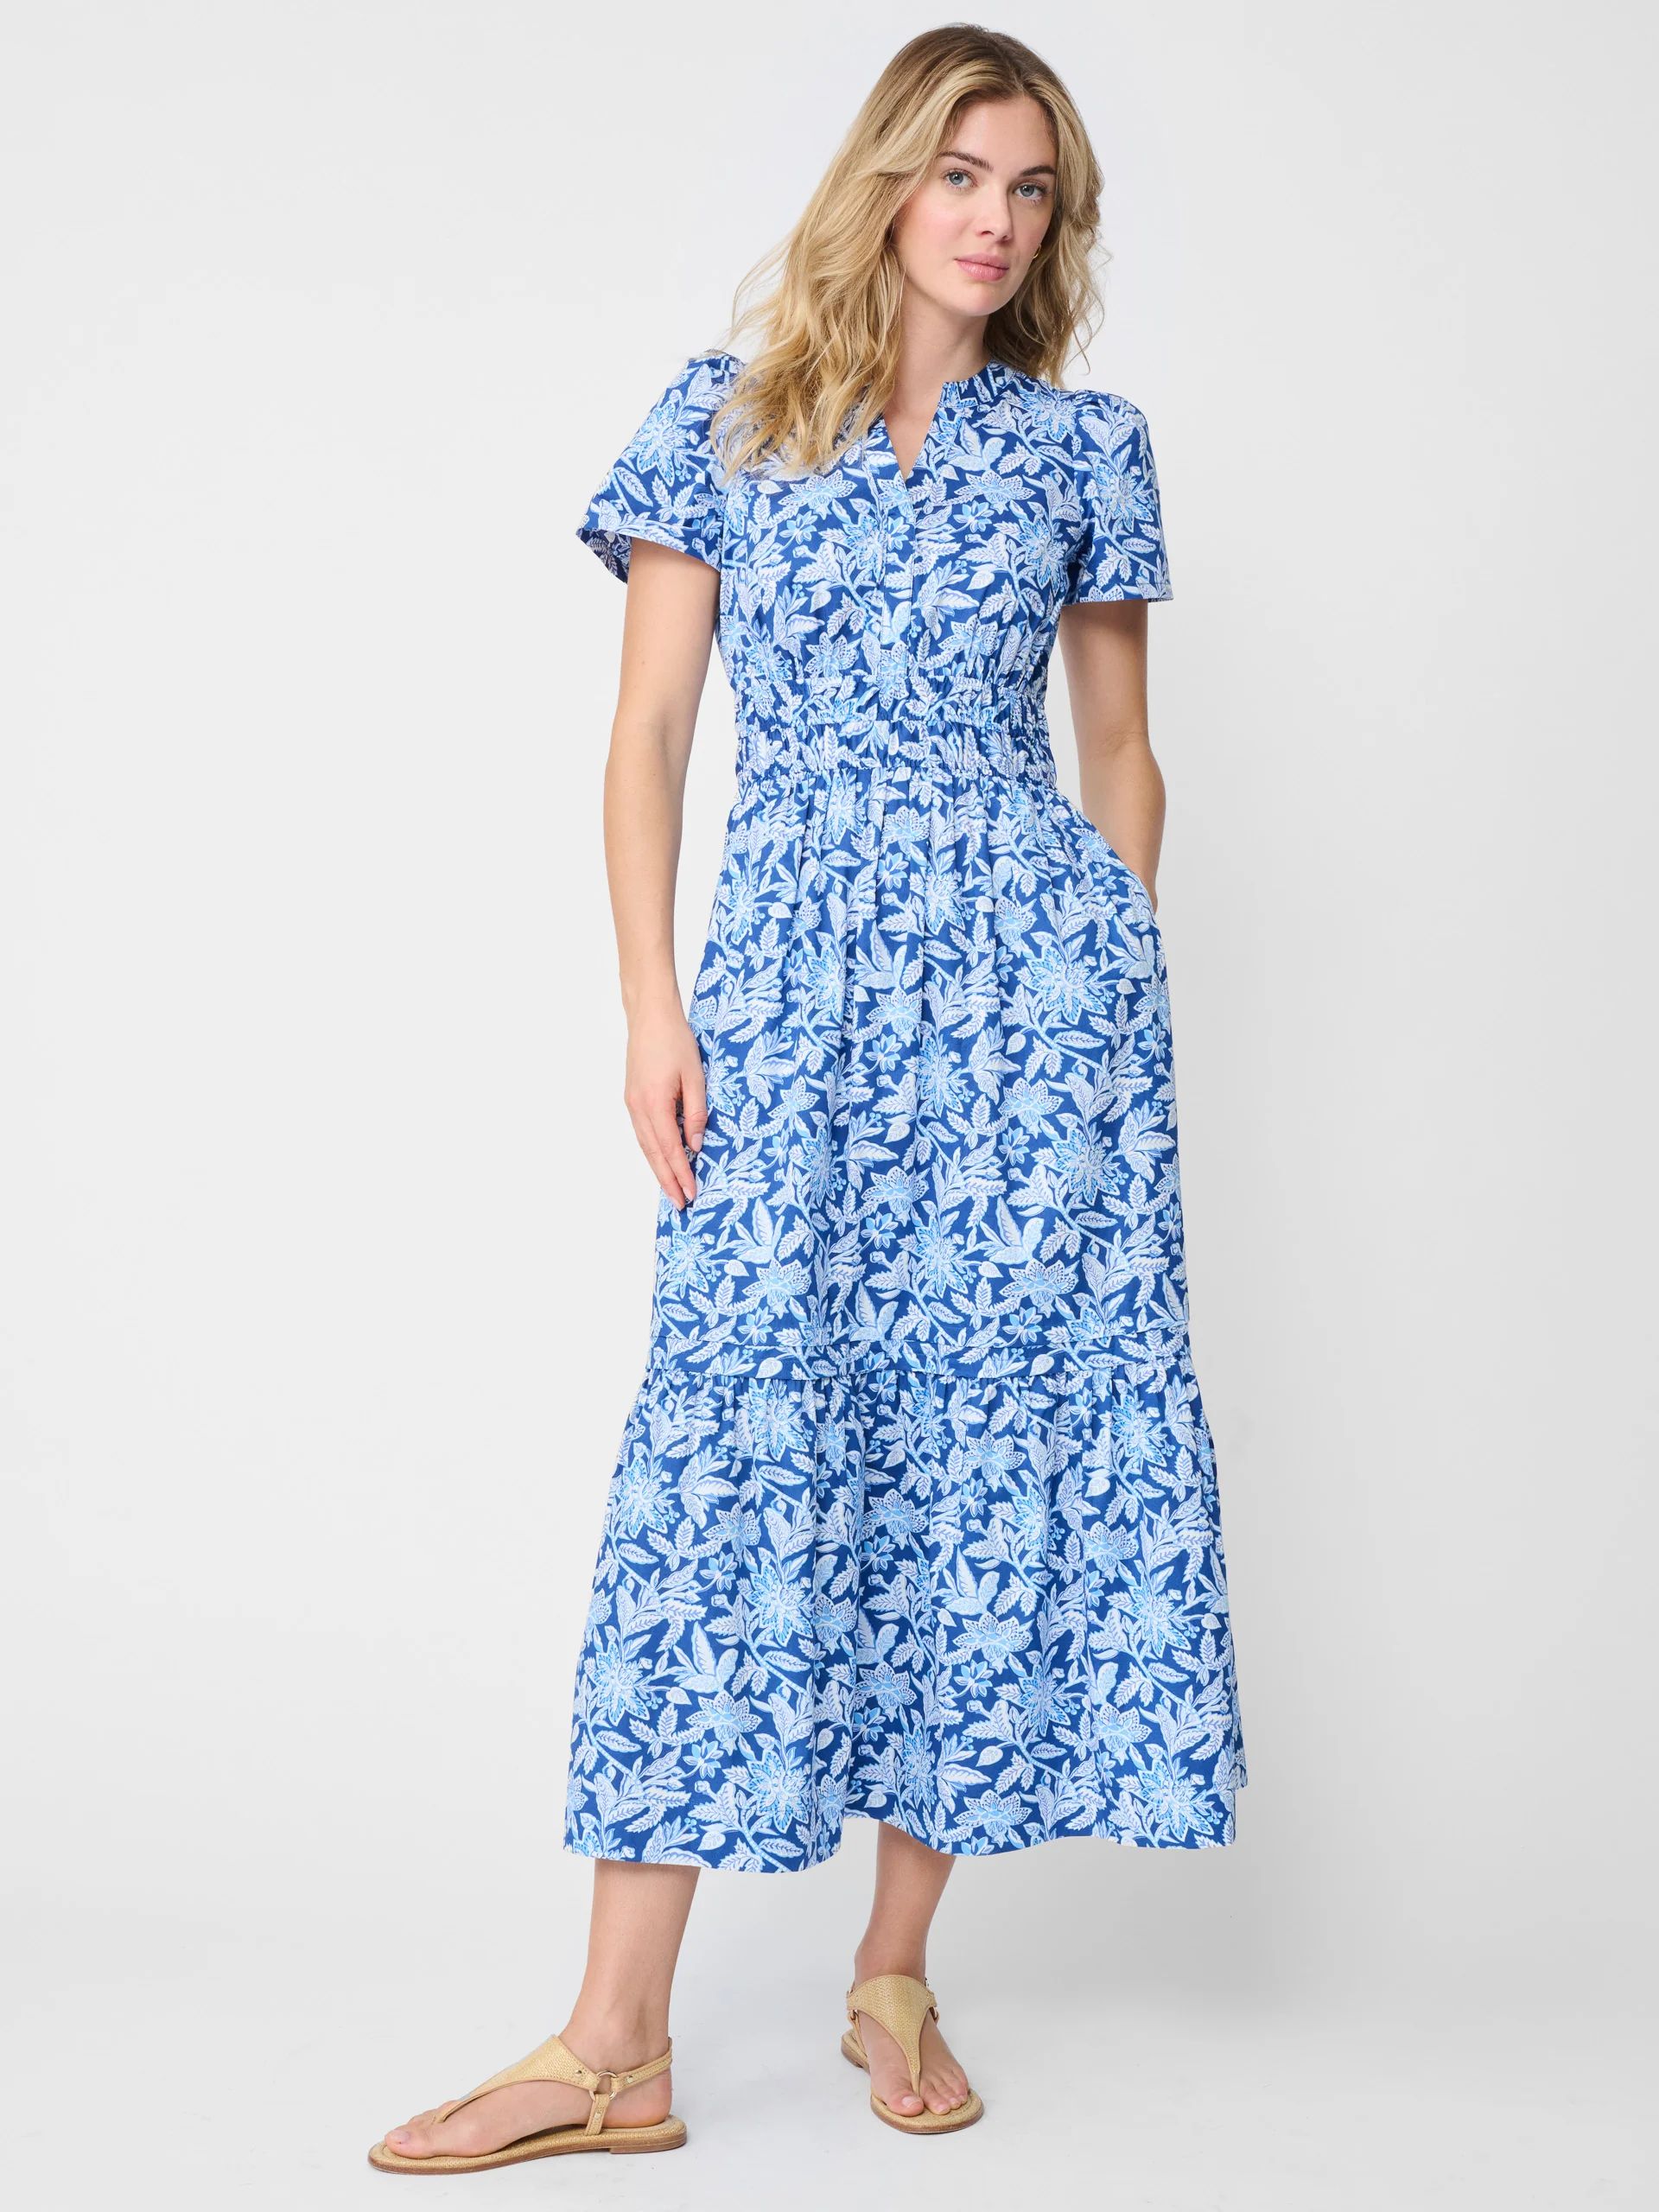 Navy/Blue Bloomsbury Mei Dress | Women's Dresses  | J.McLaughlin | J.McLaughlin